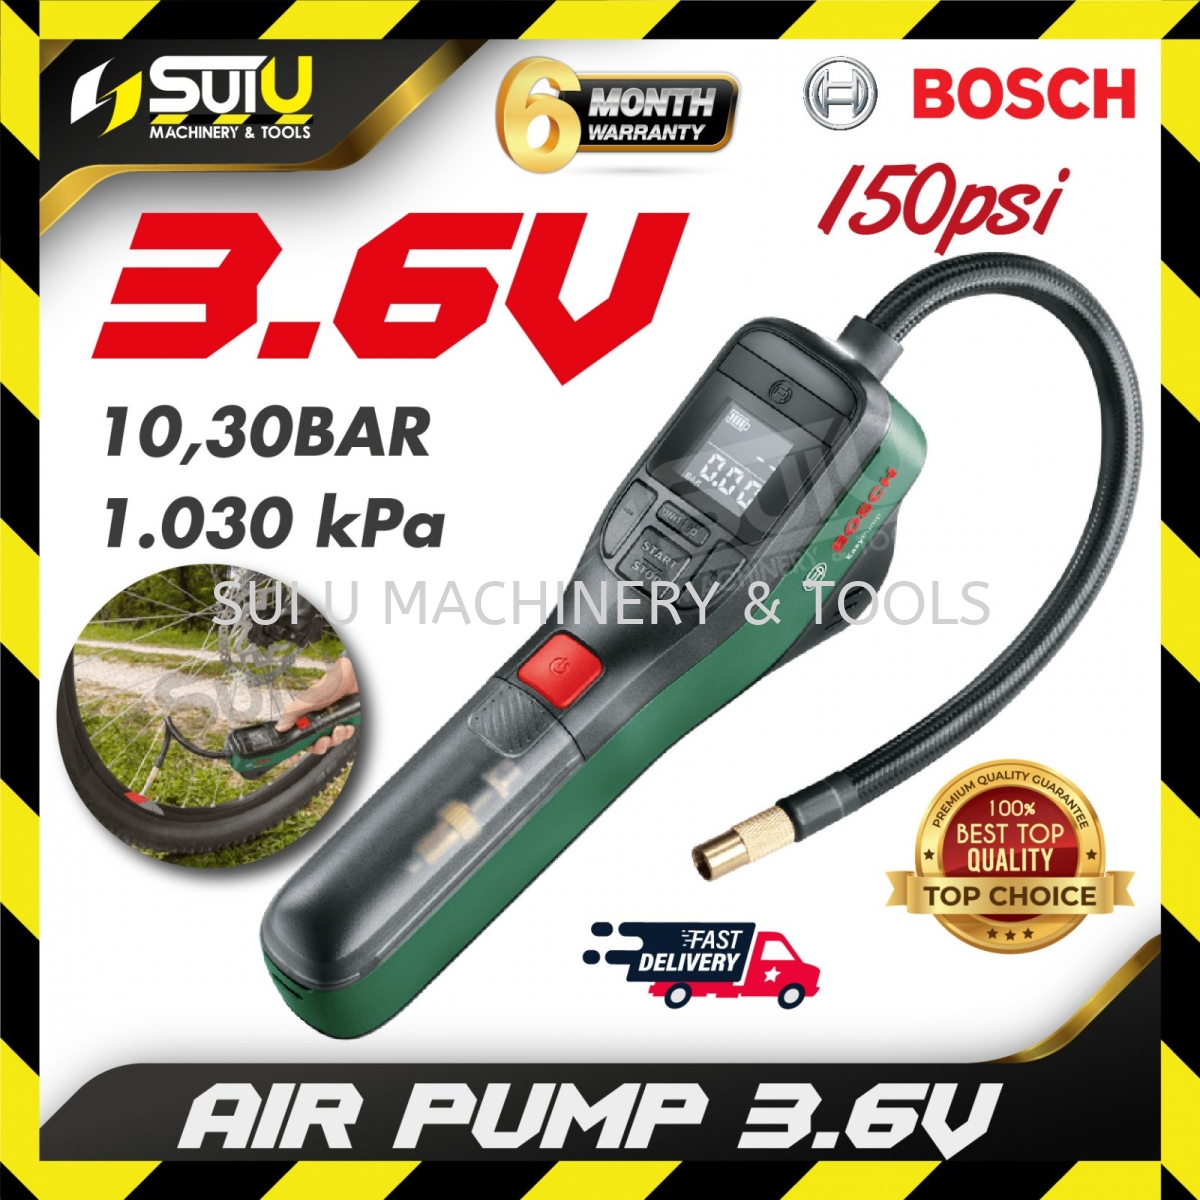 BOSCH EASYPUMP 3.6V Cordless Compressed Air Pump Air Tool Kuala